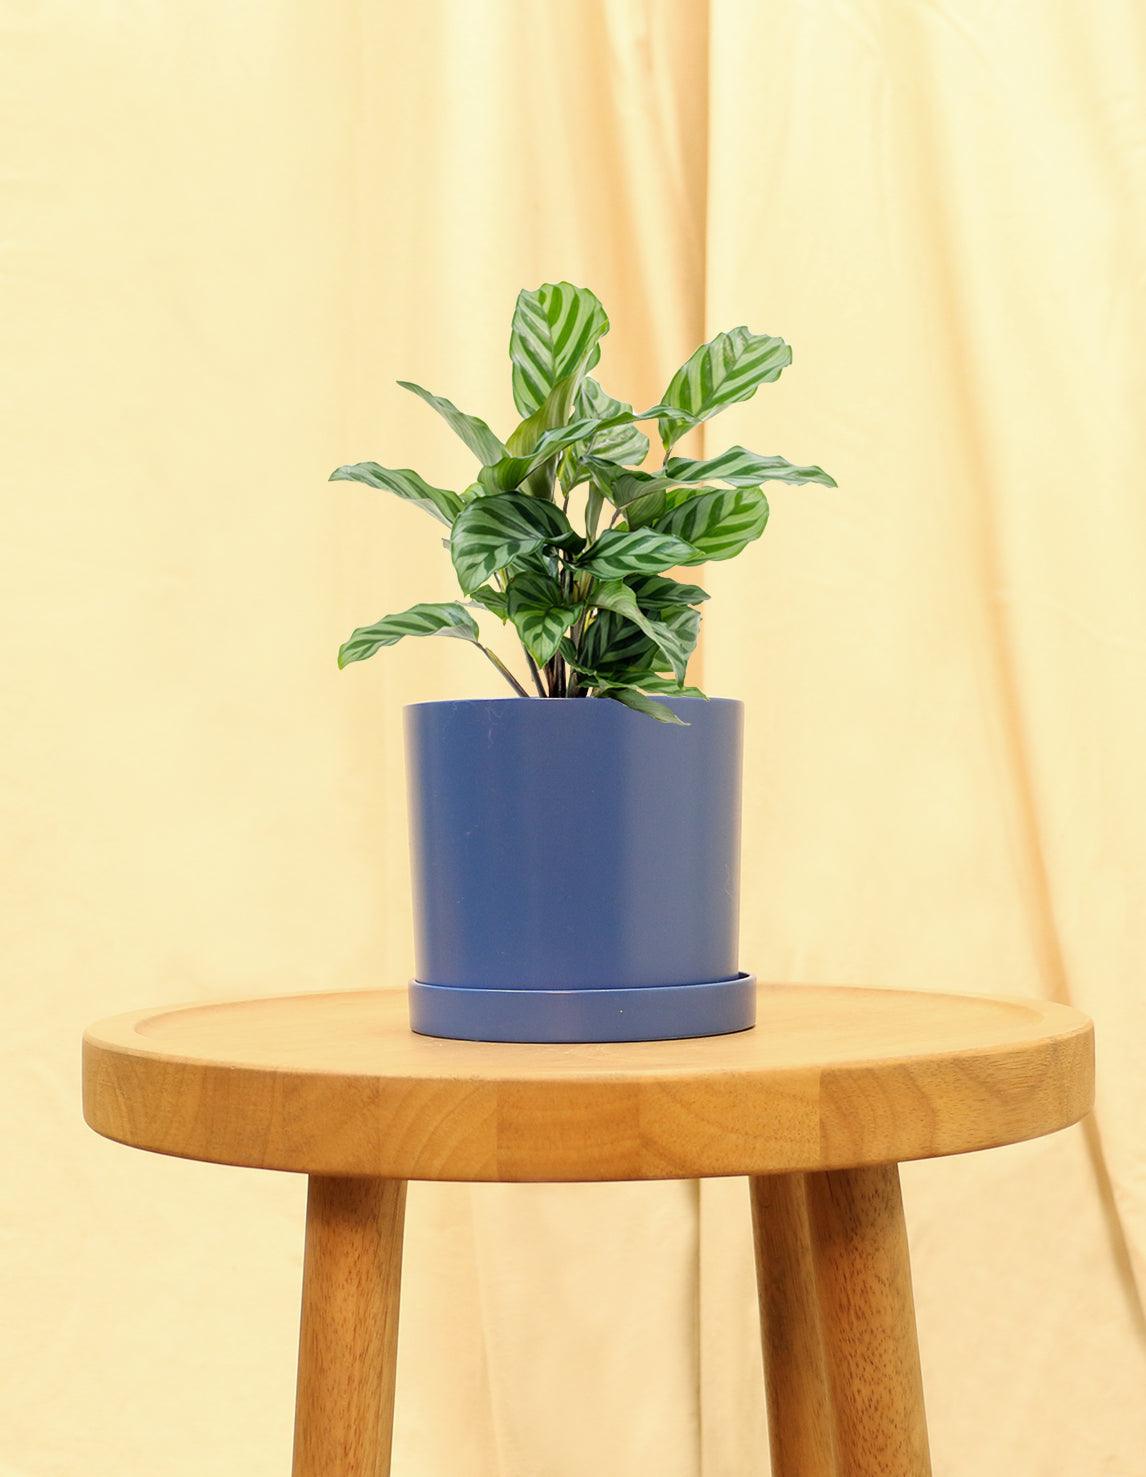 Small Calathea Freddie Houseplant in blue pot.